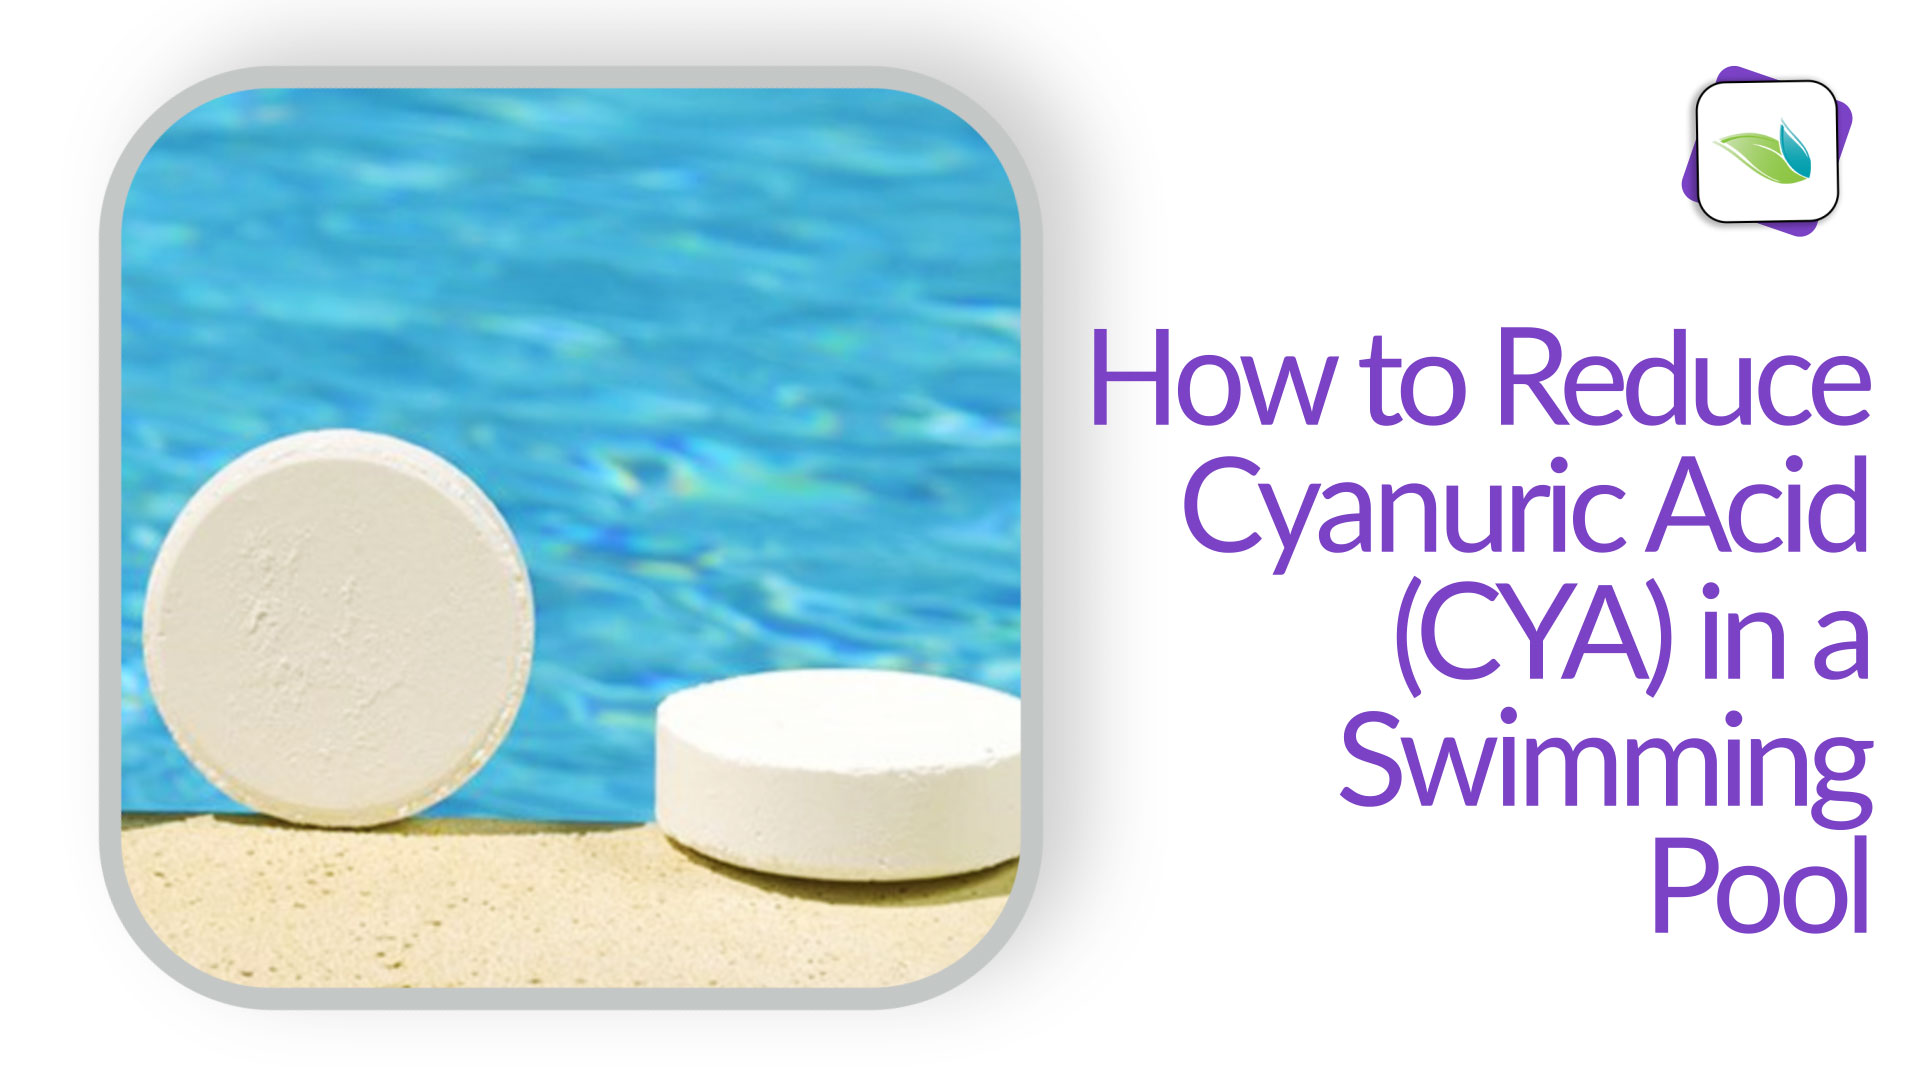 How to Reduce Cyanuric Acid (CYA) in a Swimming Pool